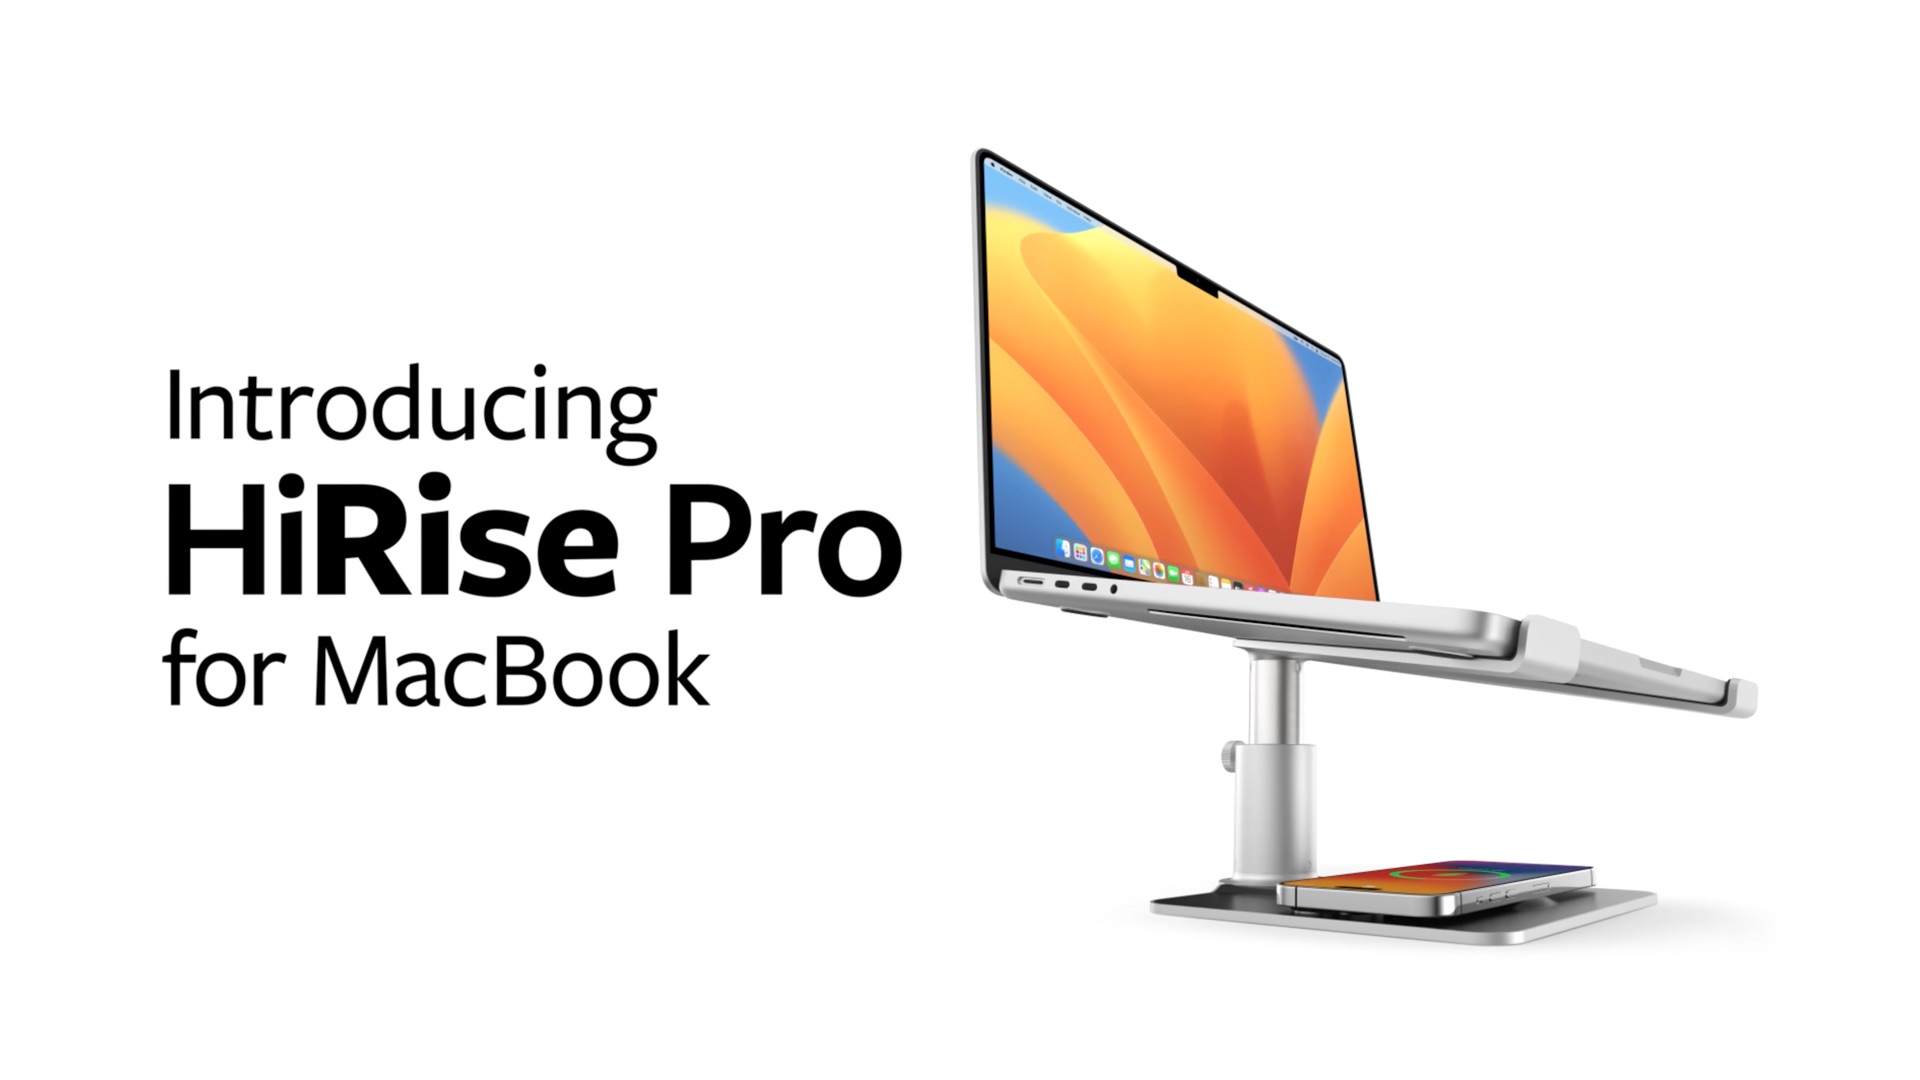 Introducing Twelve South HiRise Pro for MacBook